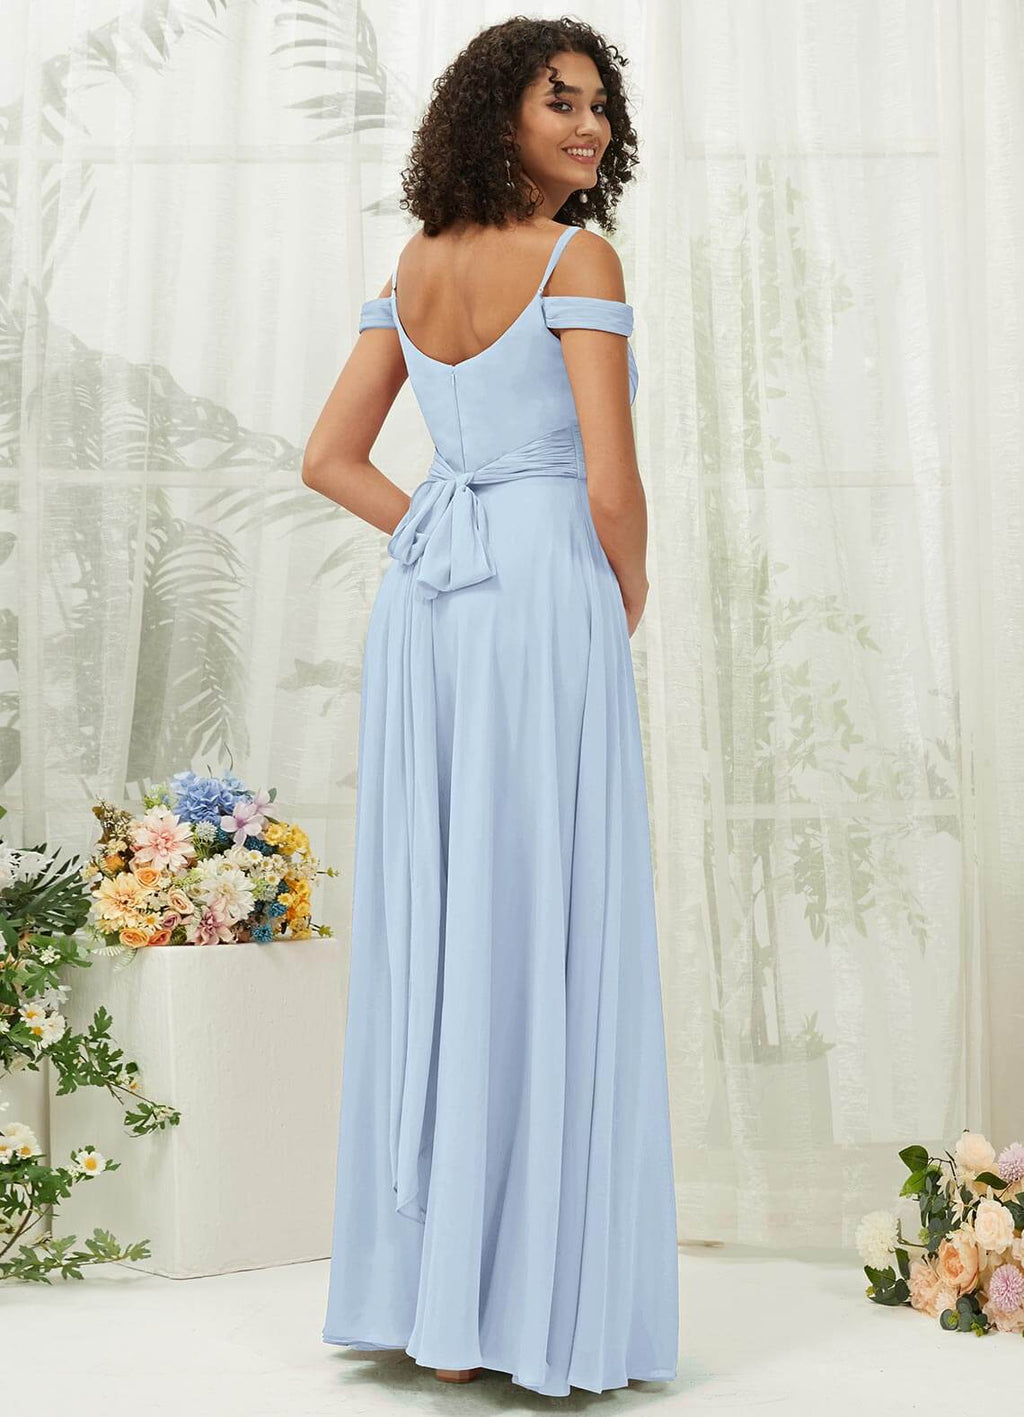 NZ Bridal Cornflower Blue Convertible Slit Chiffon Bridesmaid Dress TC0426 Heidi a